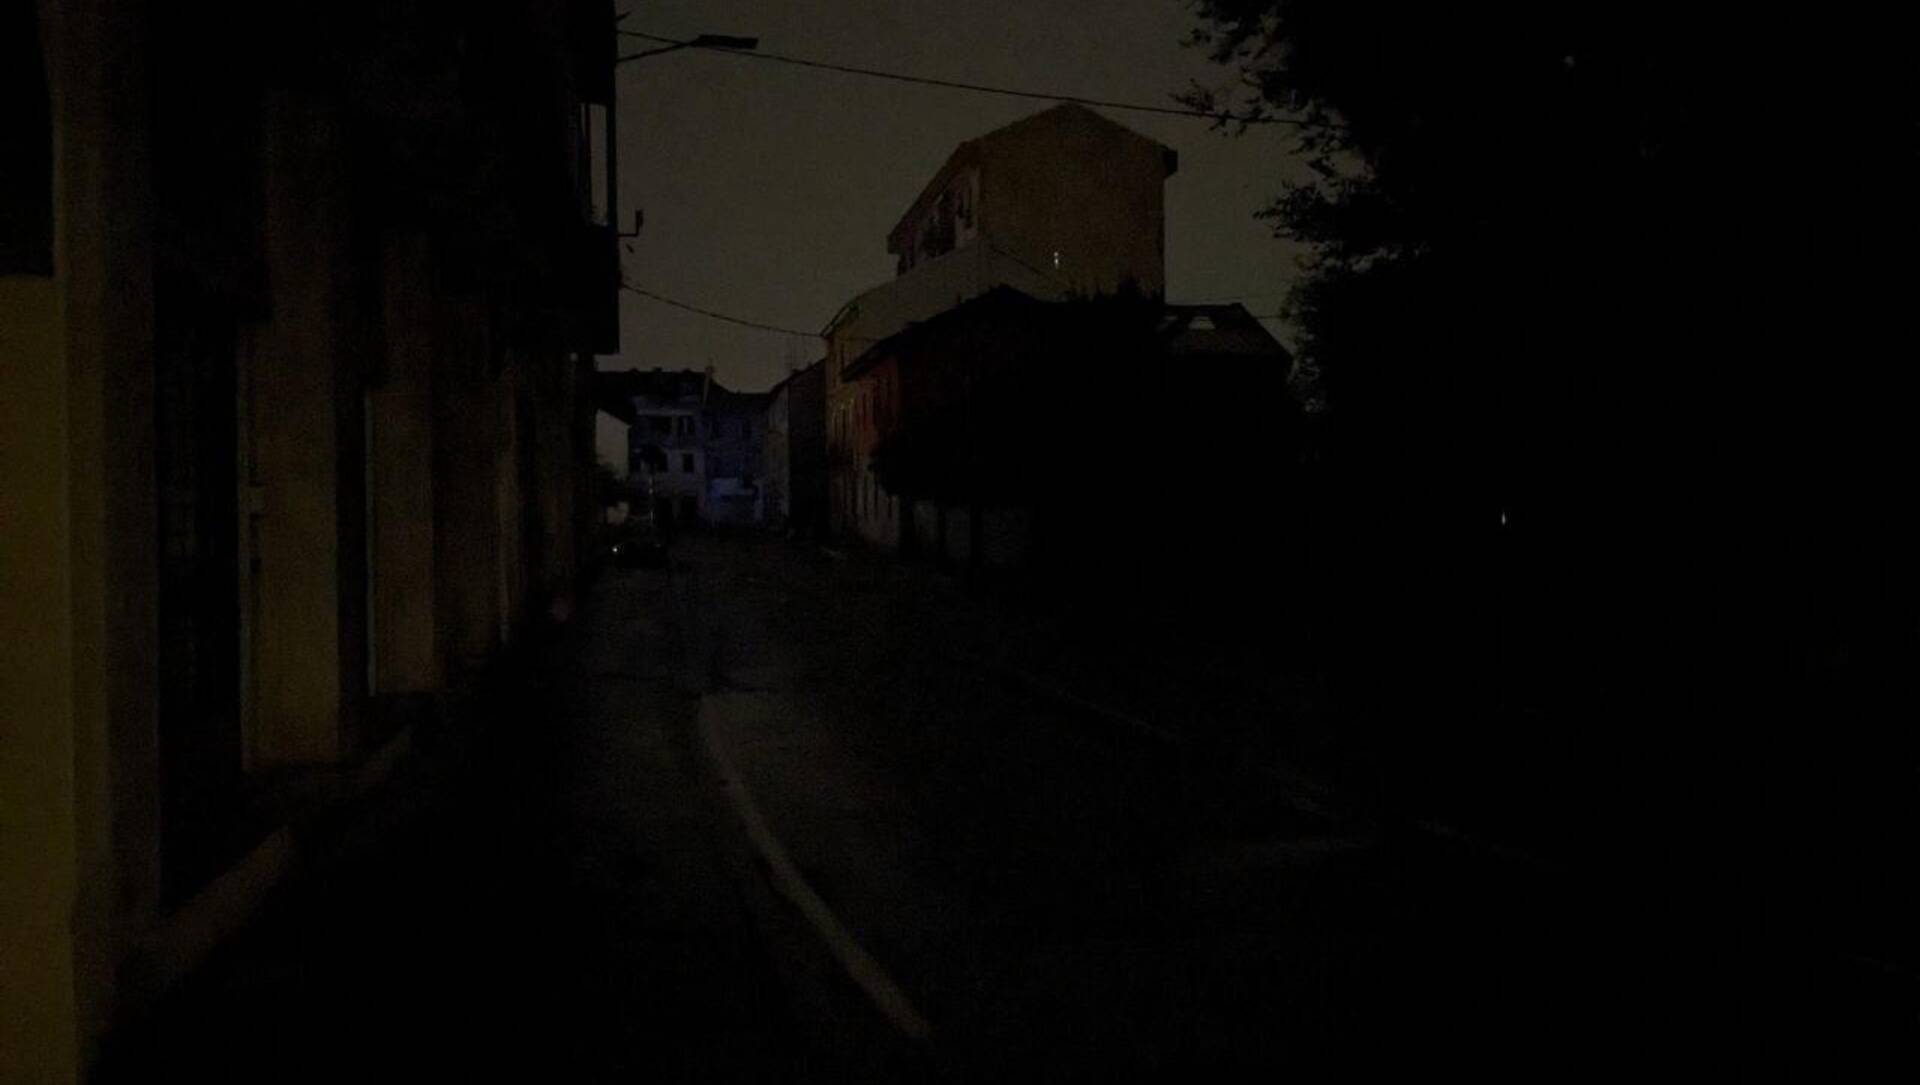 blackout via don monza via marconi saronno 28082023